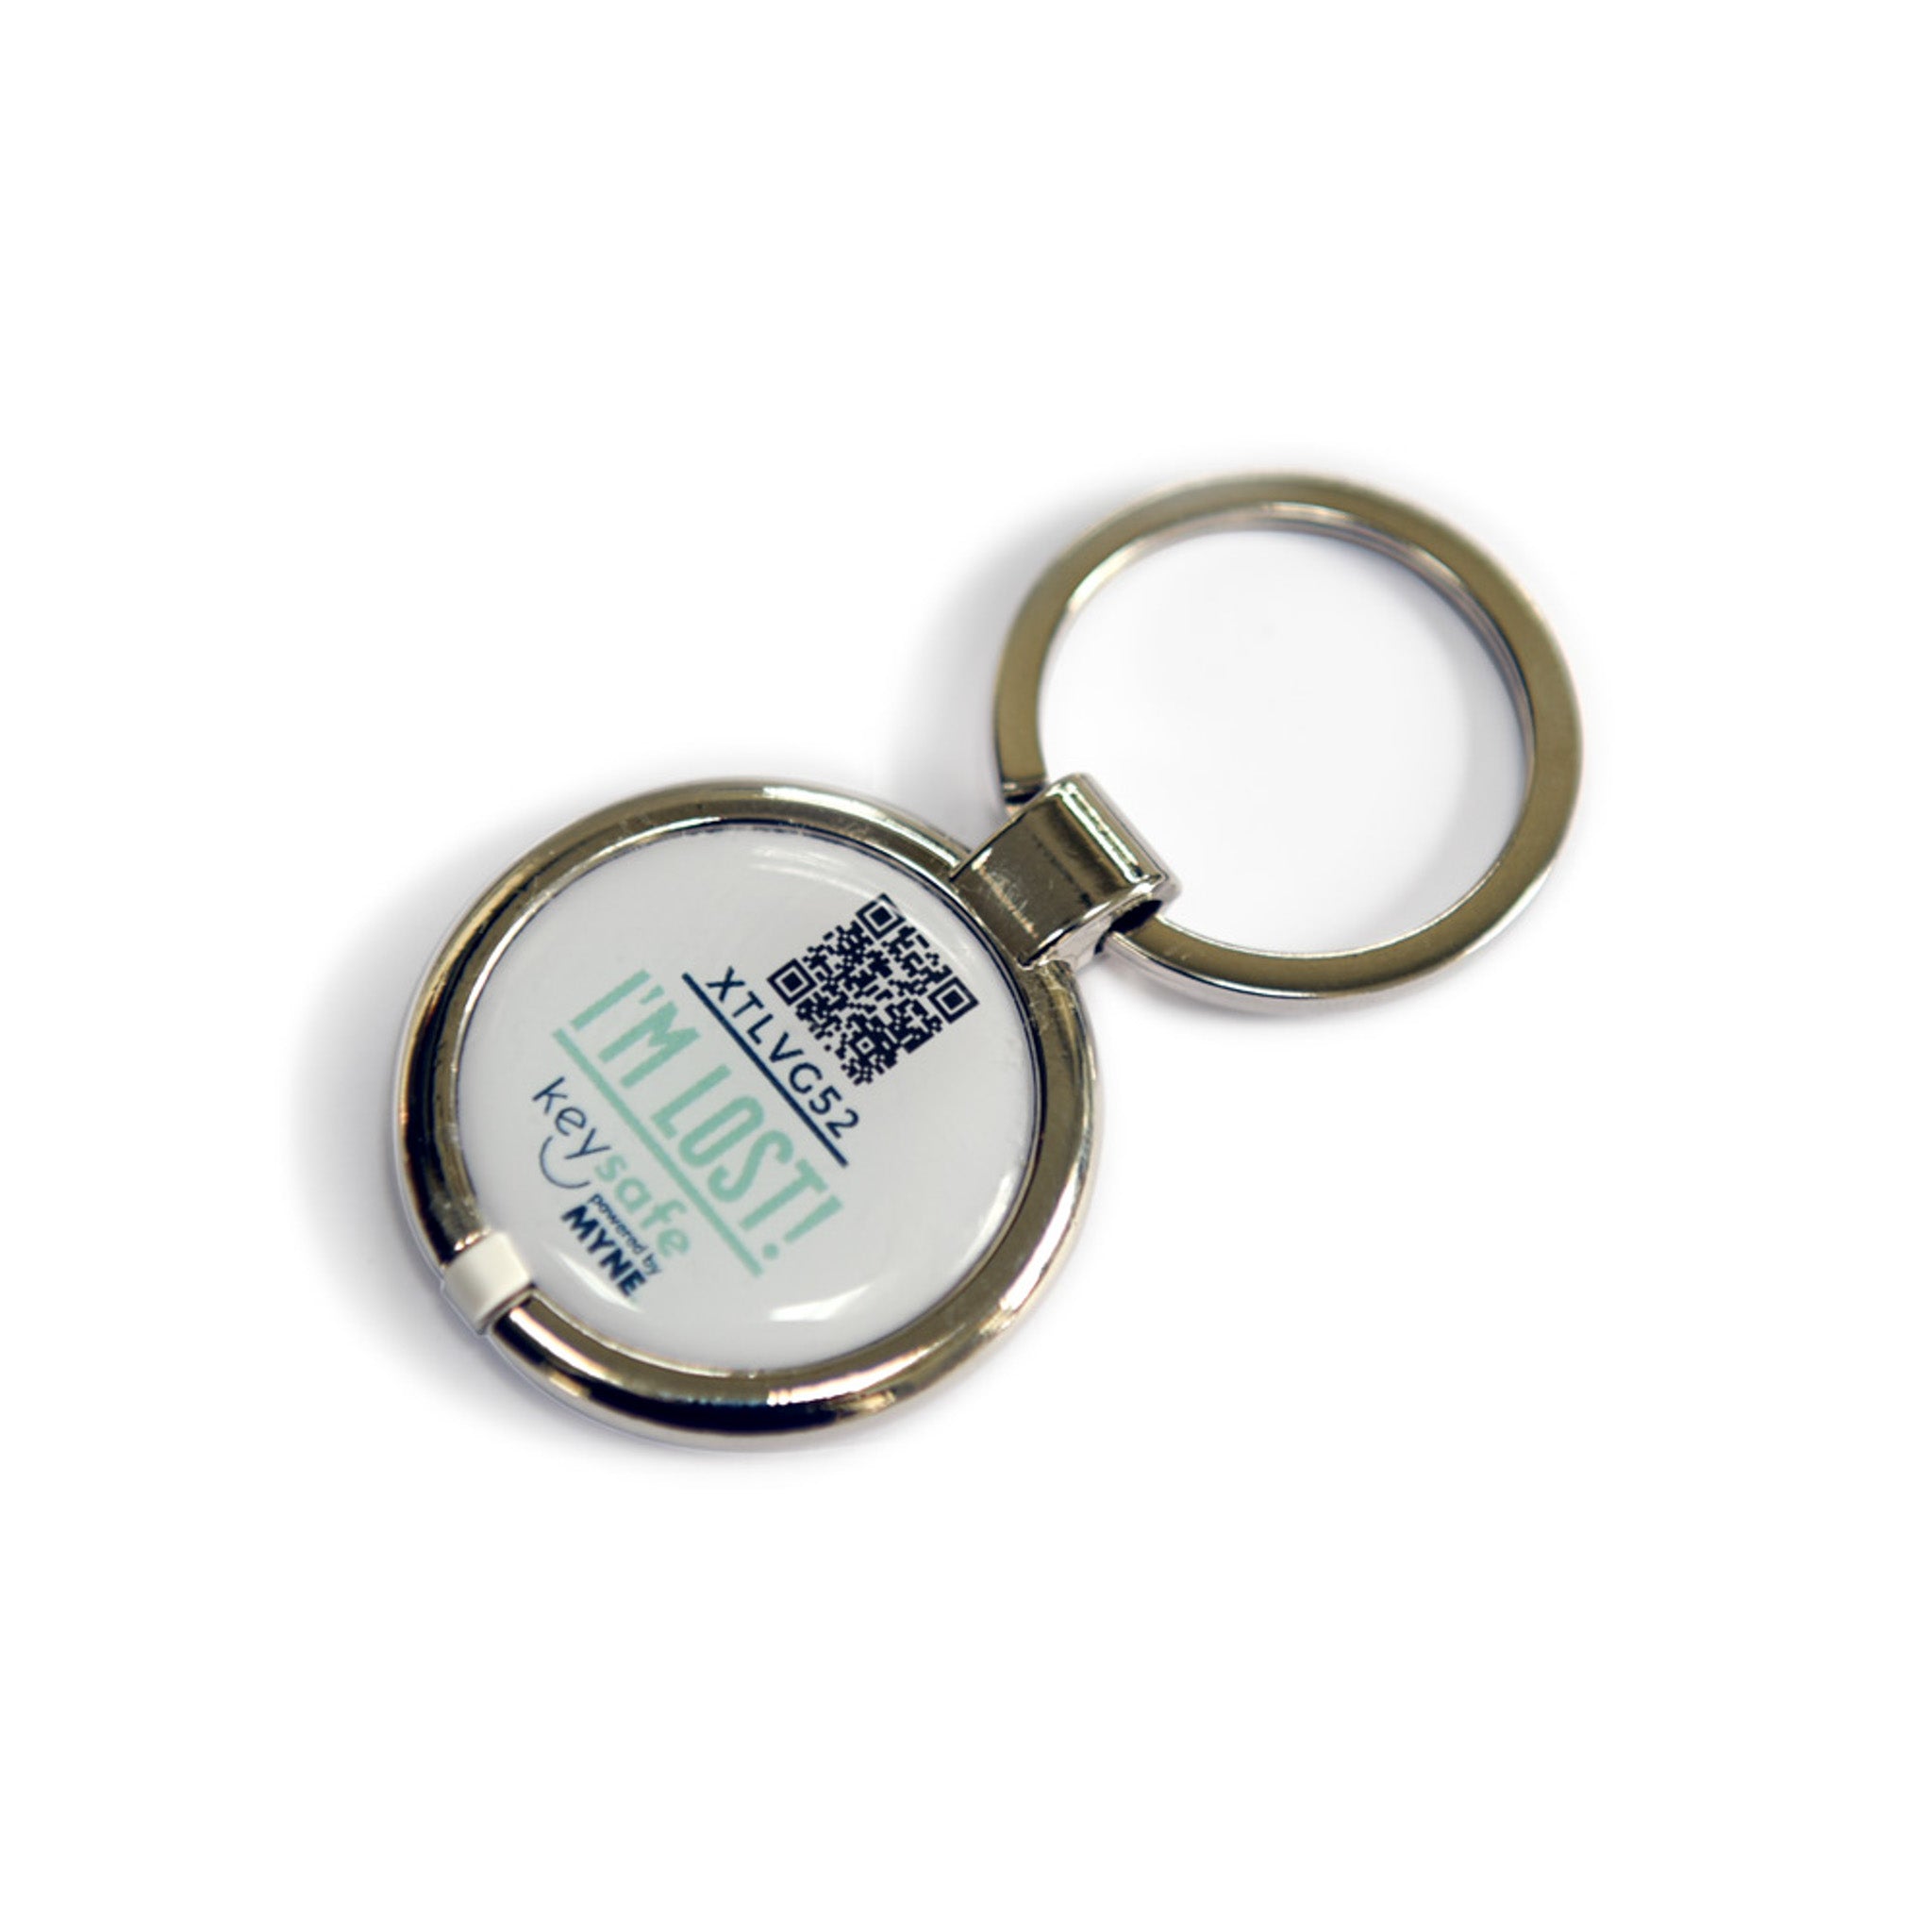 Digital keyring lying flat showing QR code | The Key Safe Company